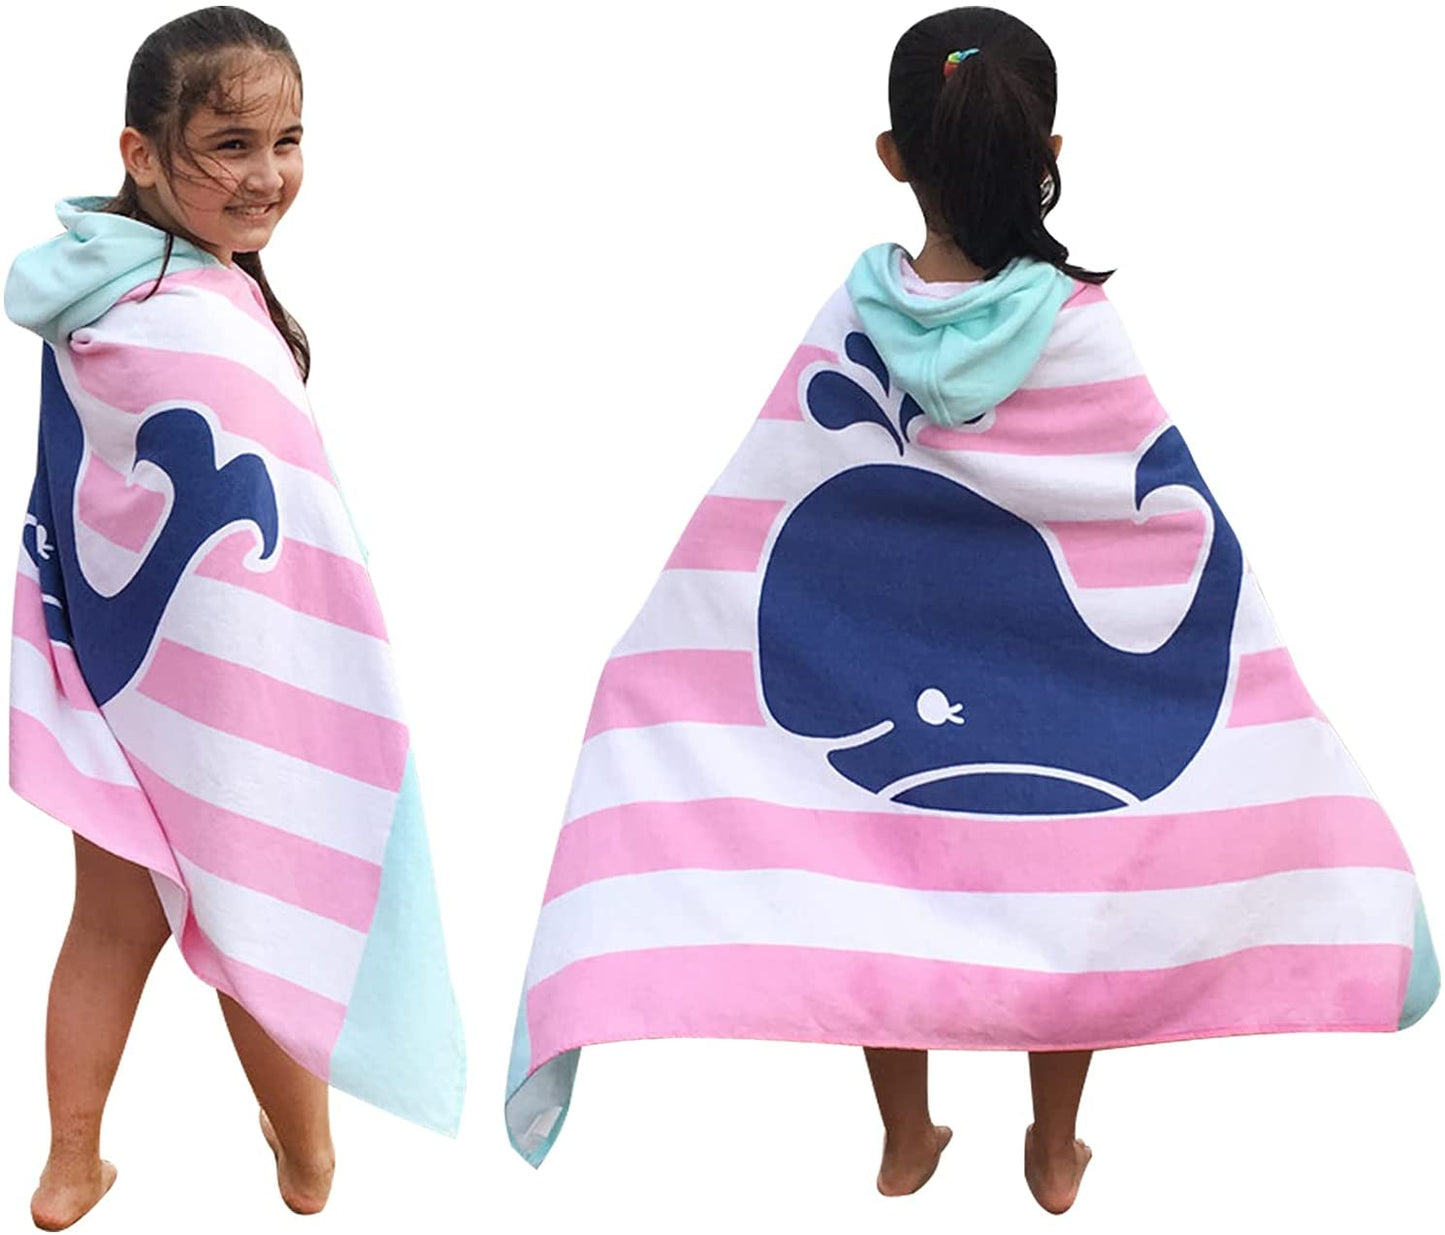 99DIY Custom Beach Bath Towel With Hood For Kids Toddlers Boys Girls Super Soft Absorbent Cotton For Bath Pool Beach Swim Coverups Bathrobe Made In China